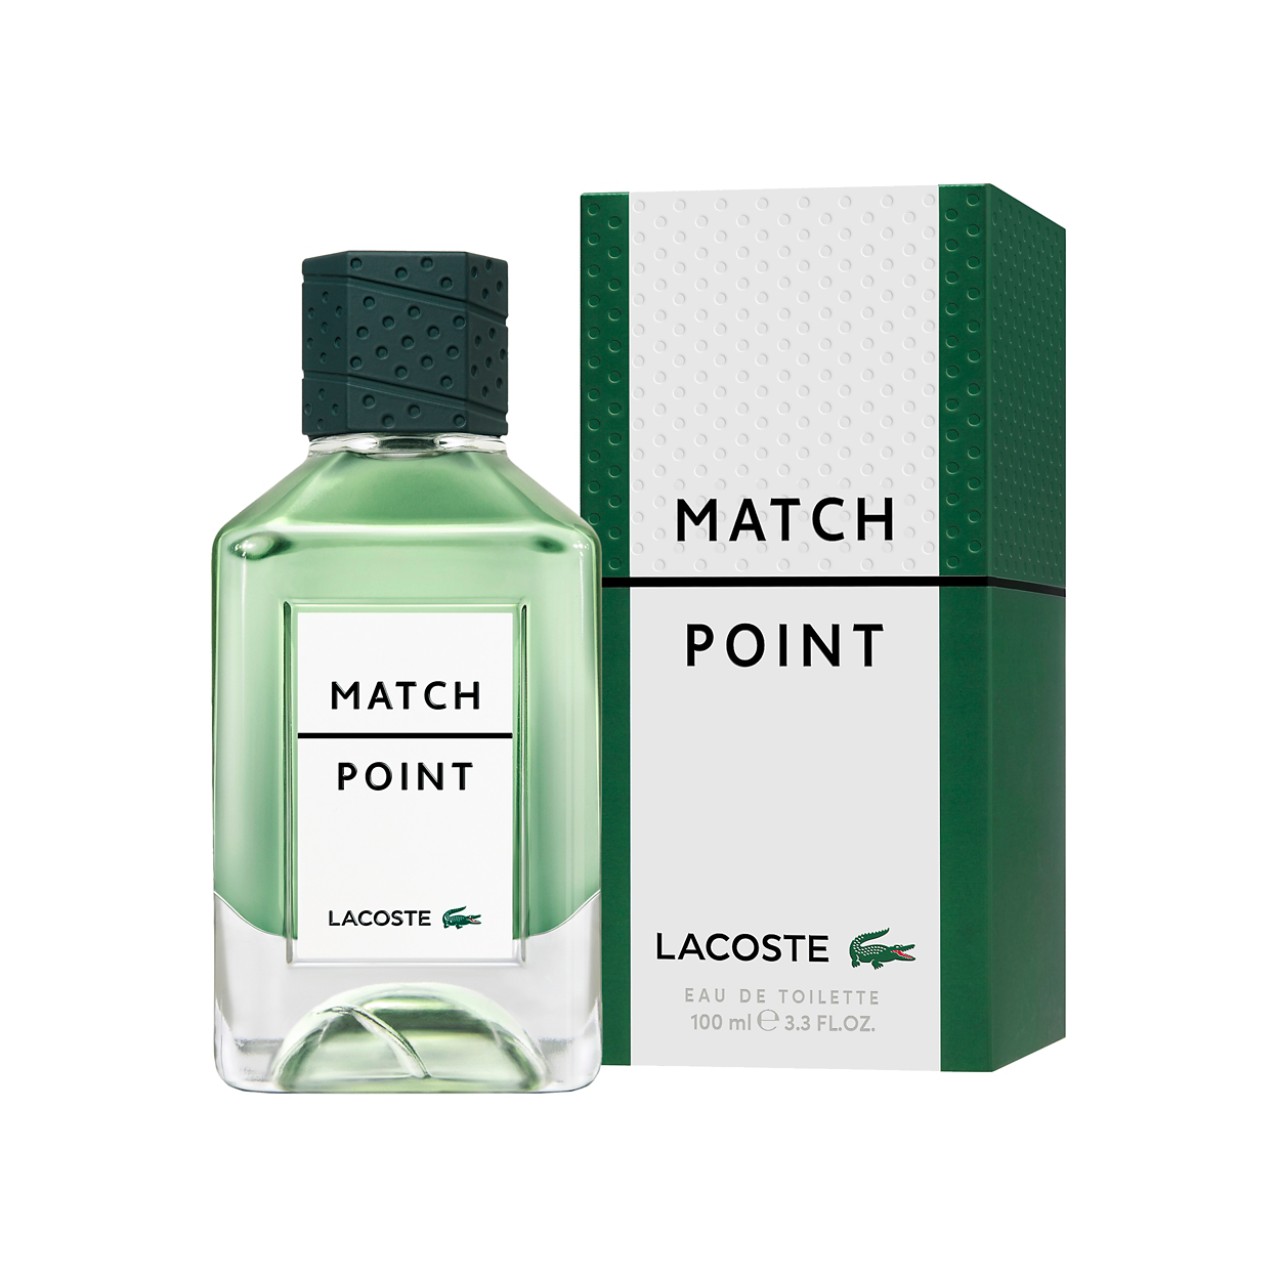 Månenytår Geometri skab Game, Set, Match Point: Coty reveals new masculine fragrance from Lacoste -  The Moodie Davitt Report -The Moodie Davitt Report